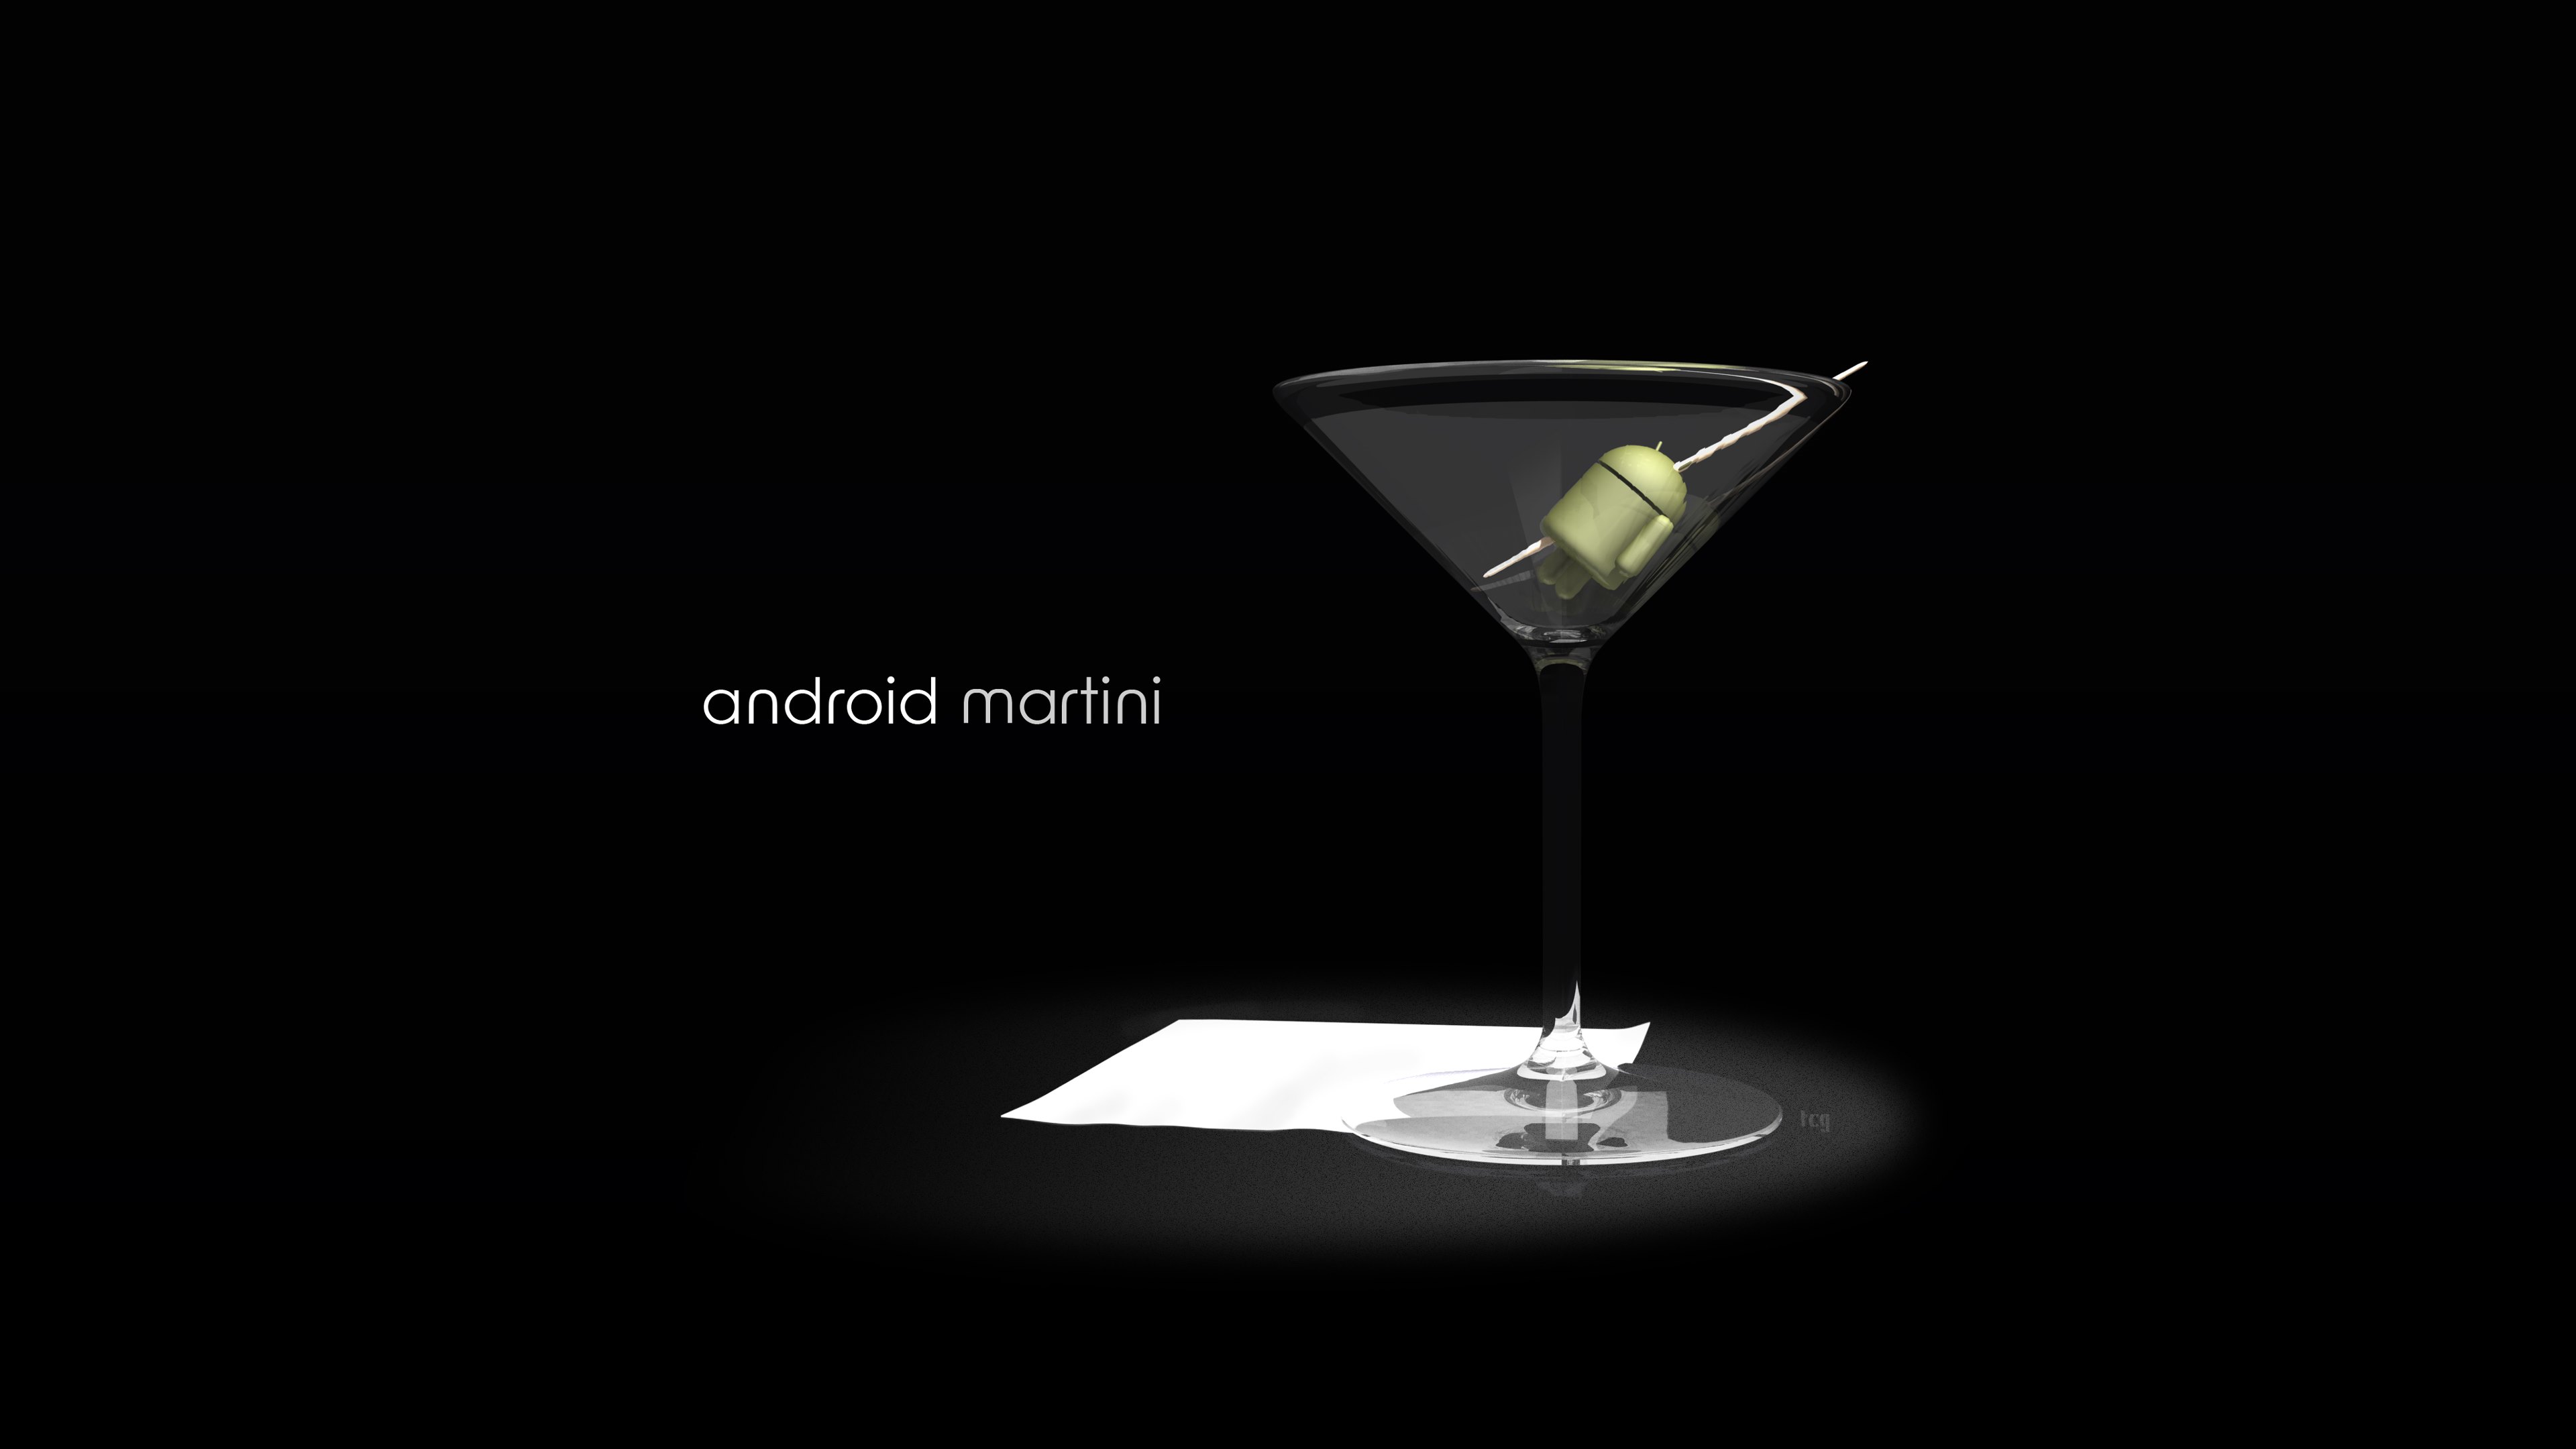 Hot Creative Art Android Martini Wallpaper